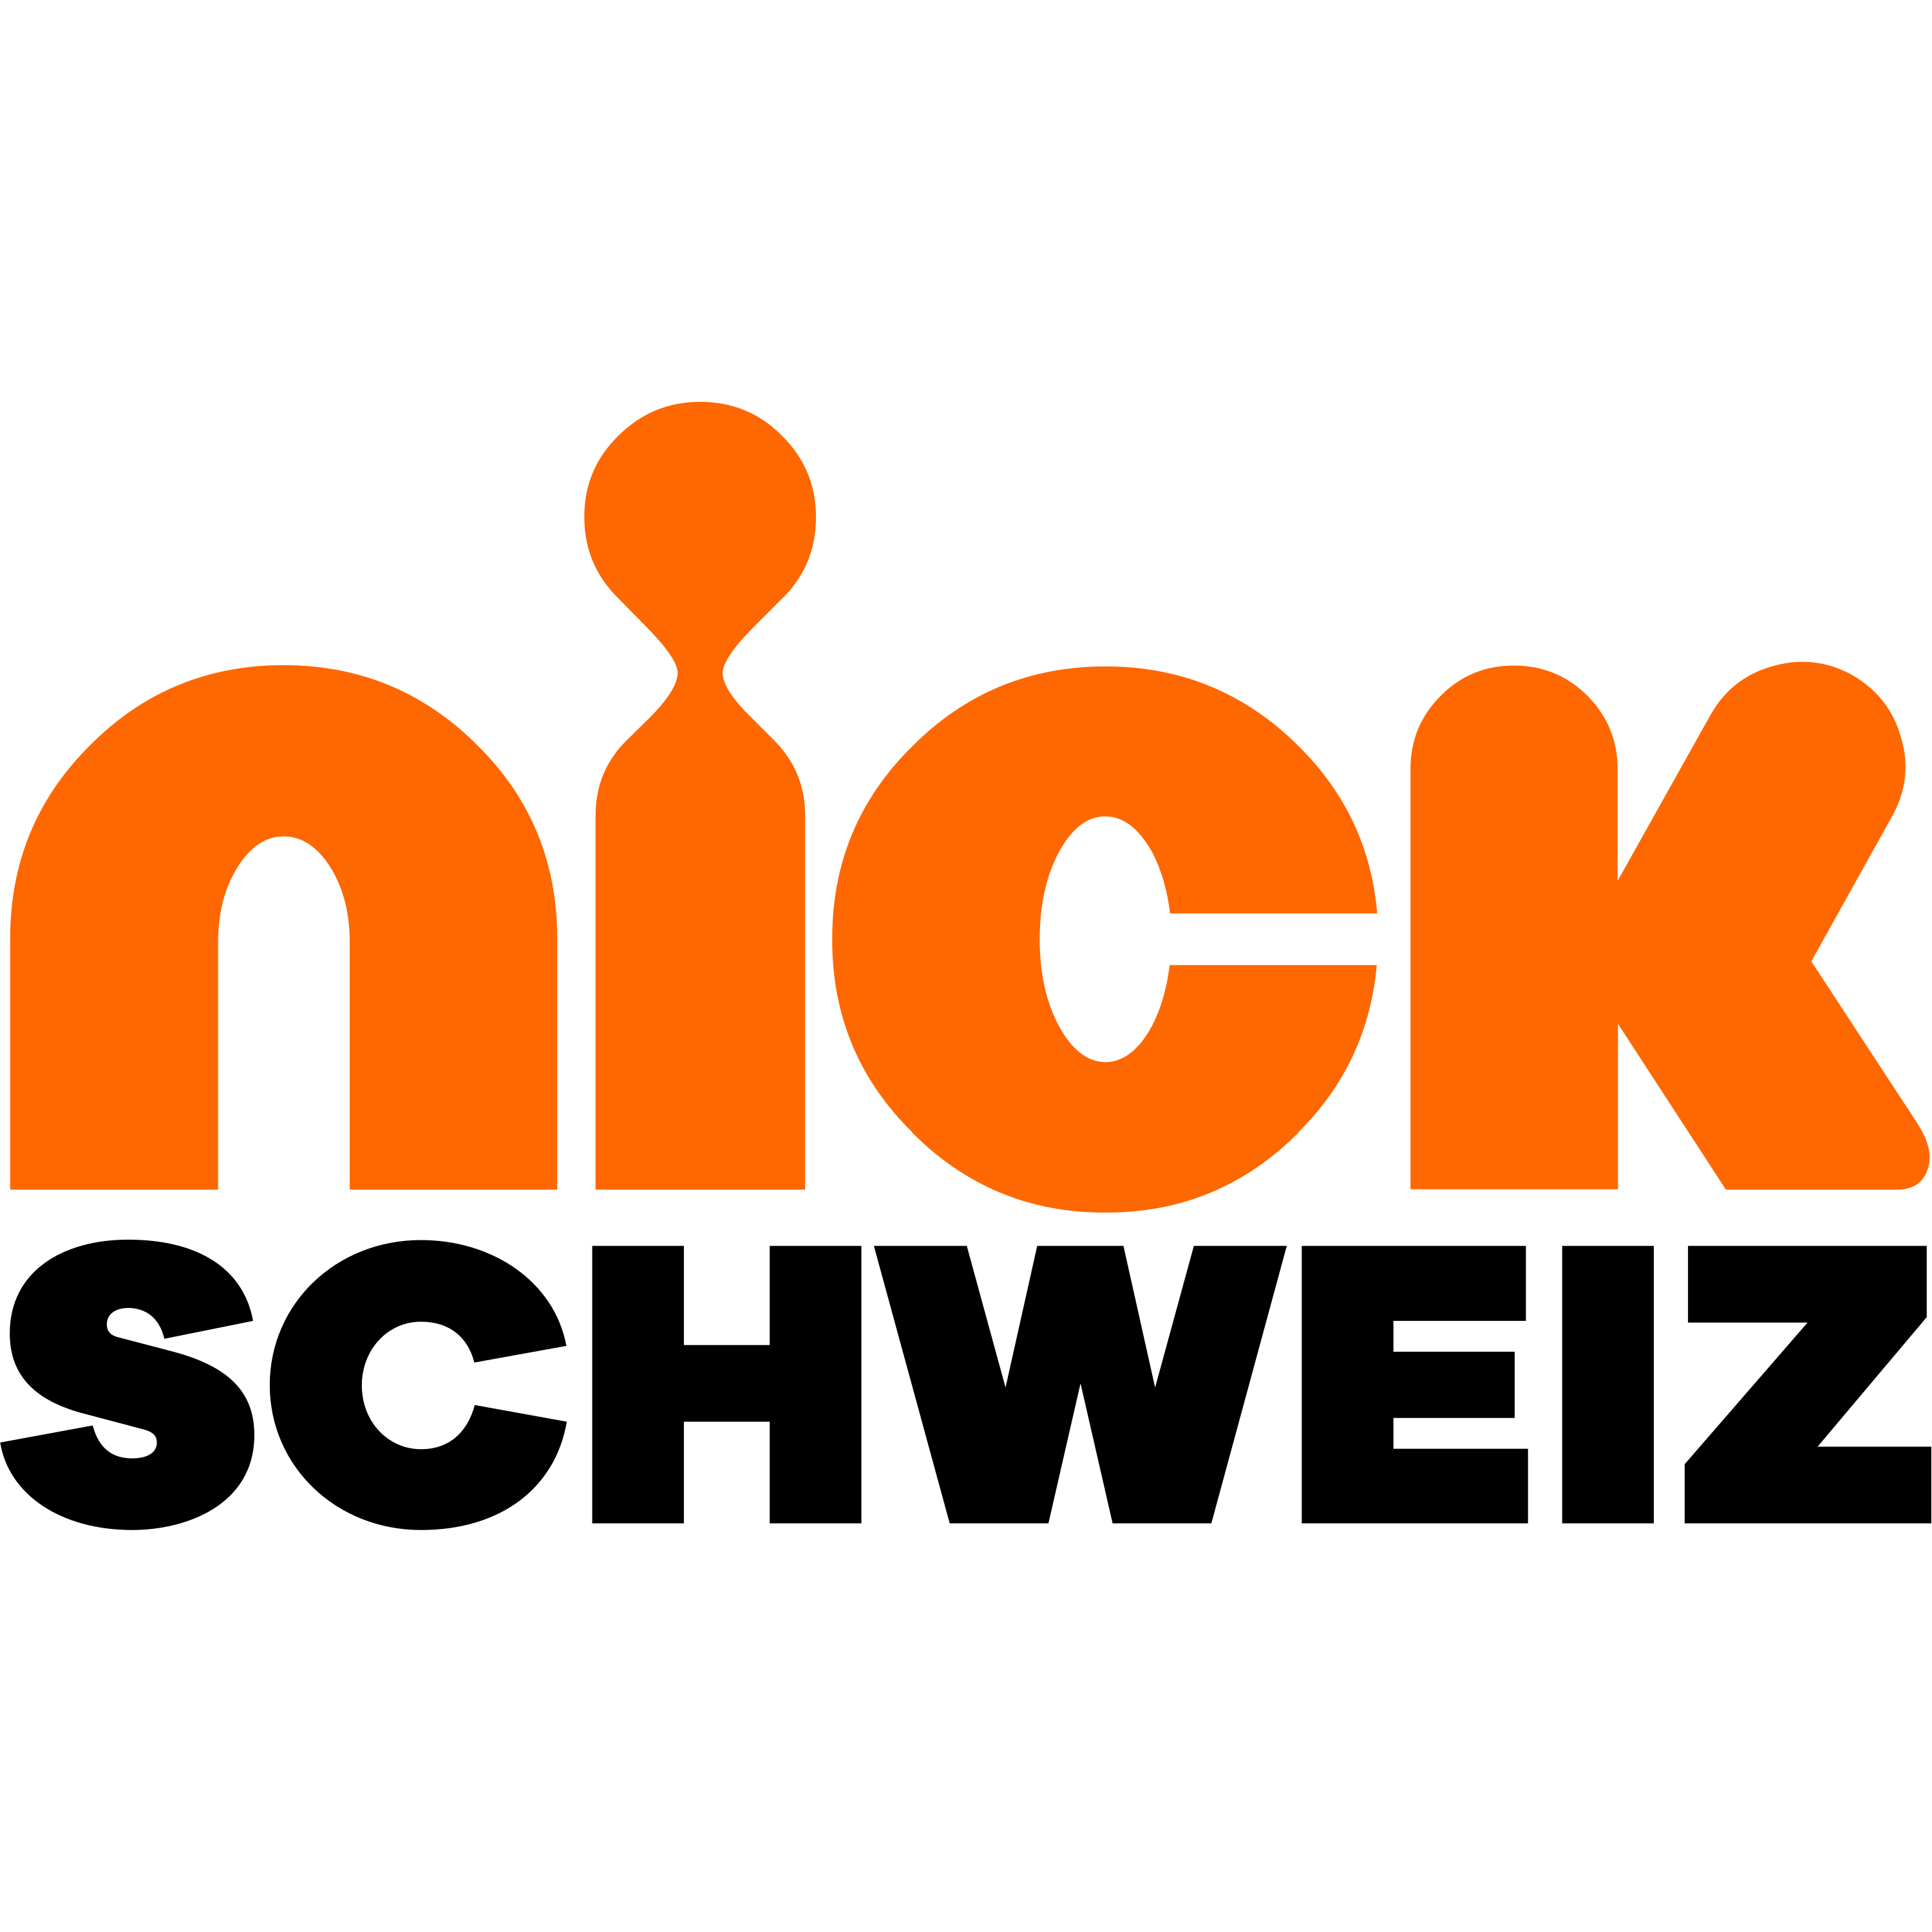 Nick Schweiz 2017 Logo  Transparent Image